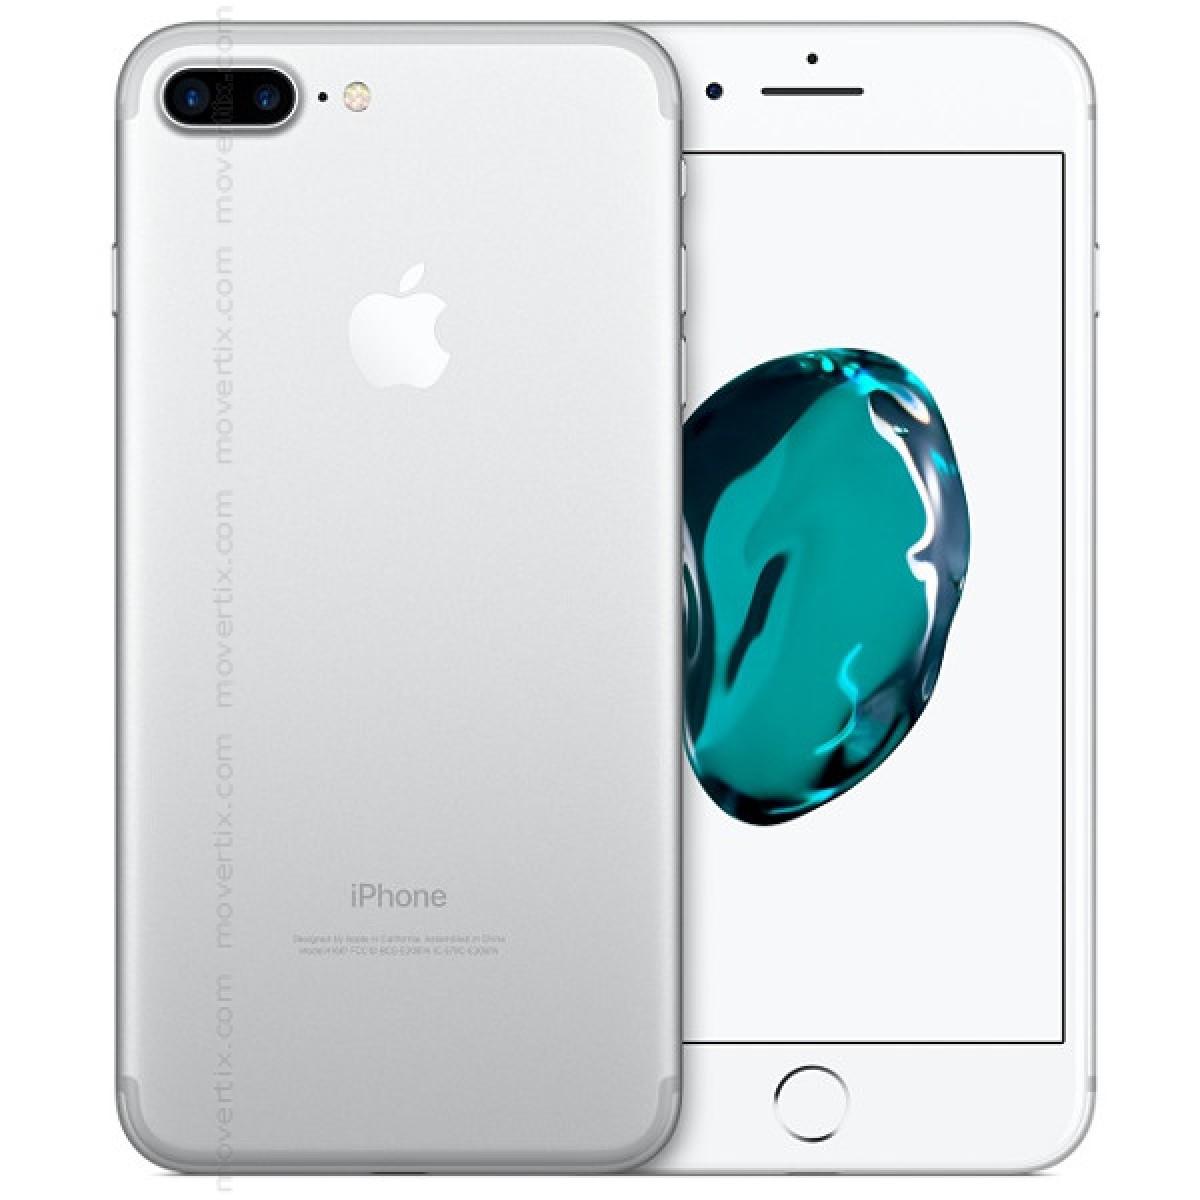 Apple iPhone 7 Plus Silver 128GB 0190198044082  Movertix Mobile Phones Shop